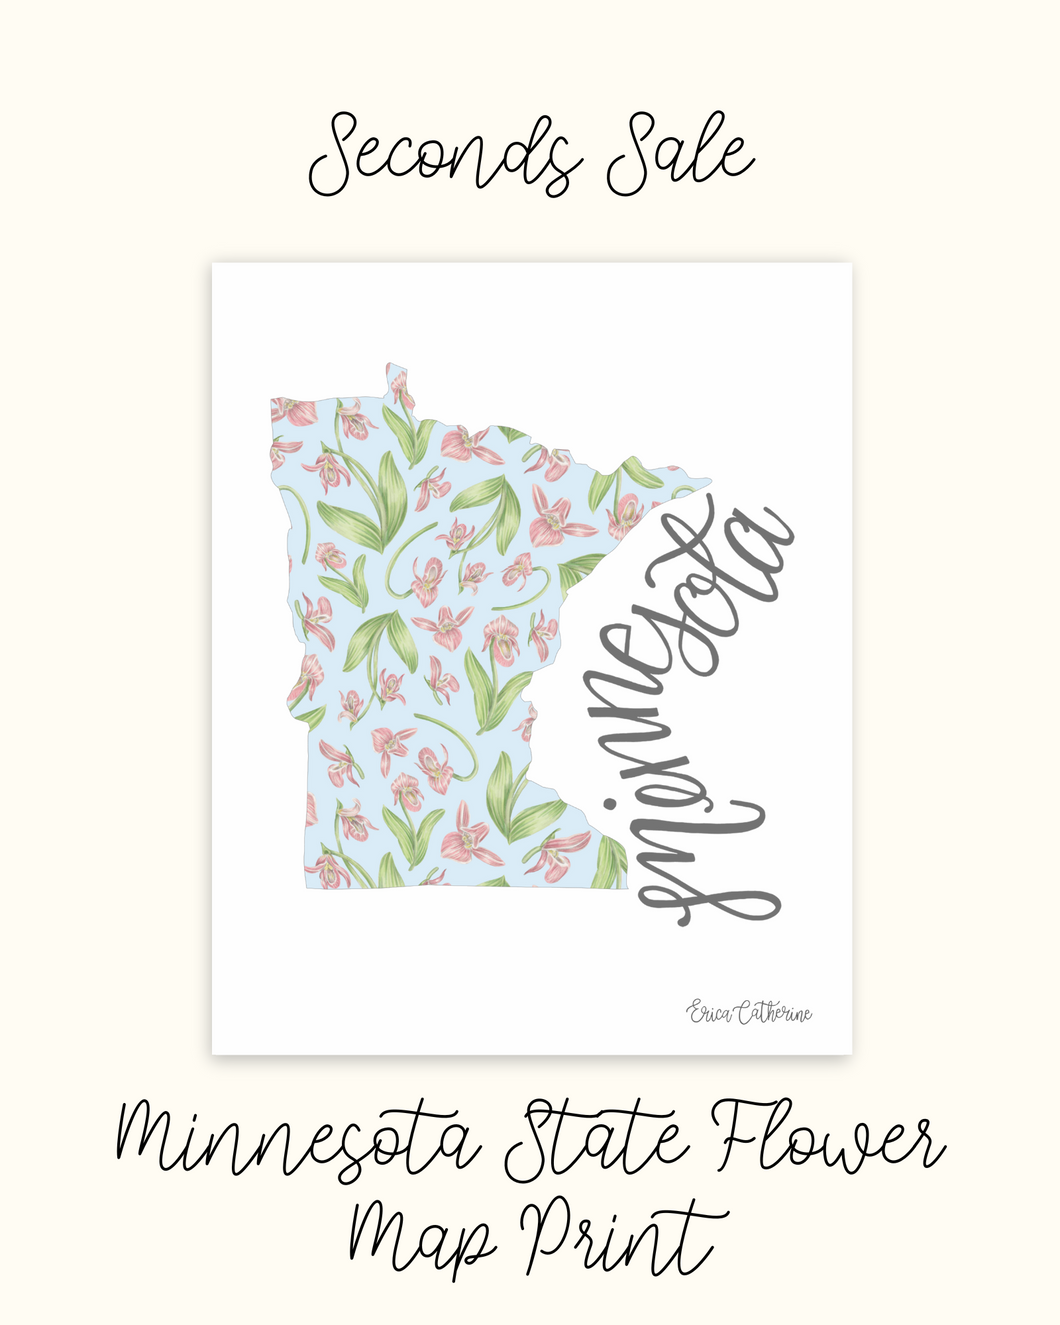 Minnesota State Flower Map - Seconds Sale